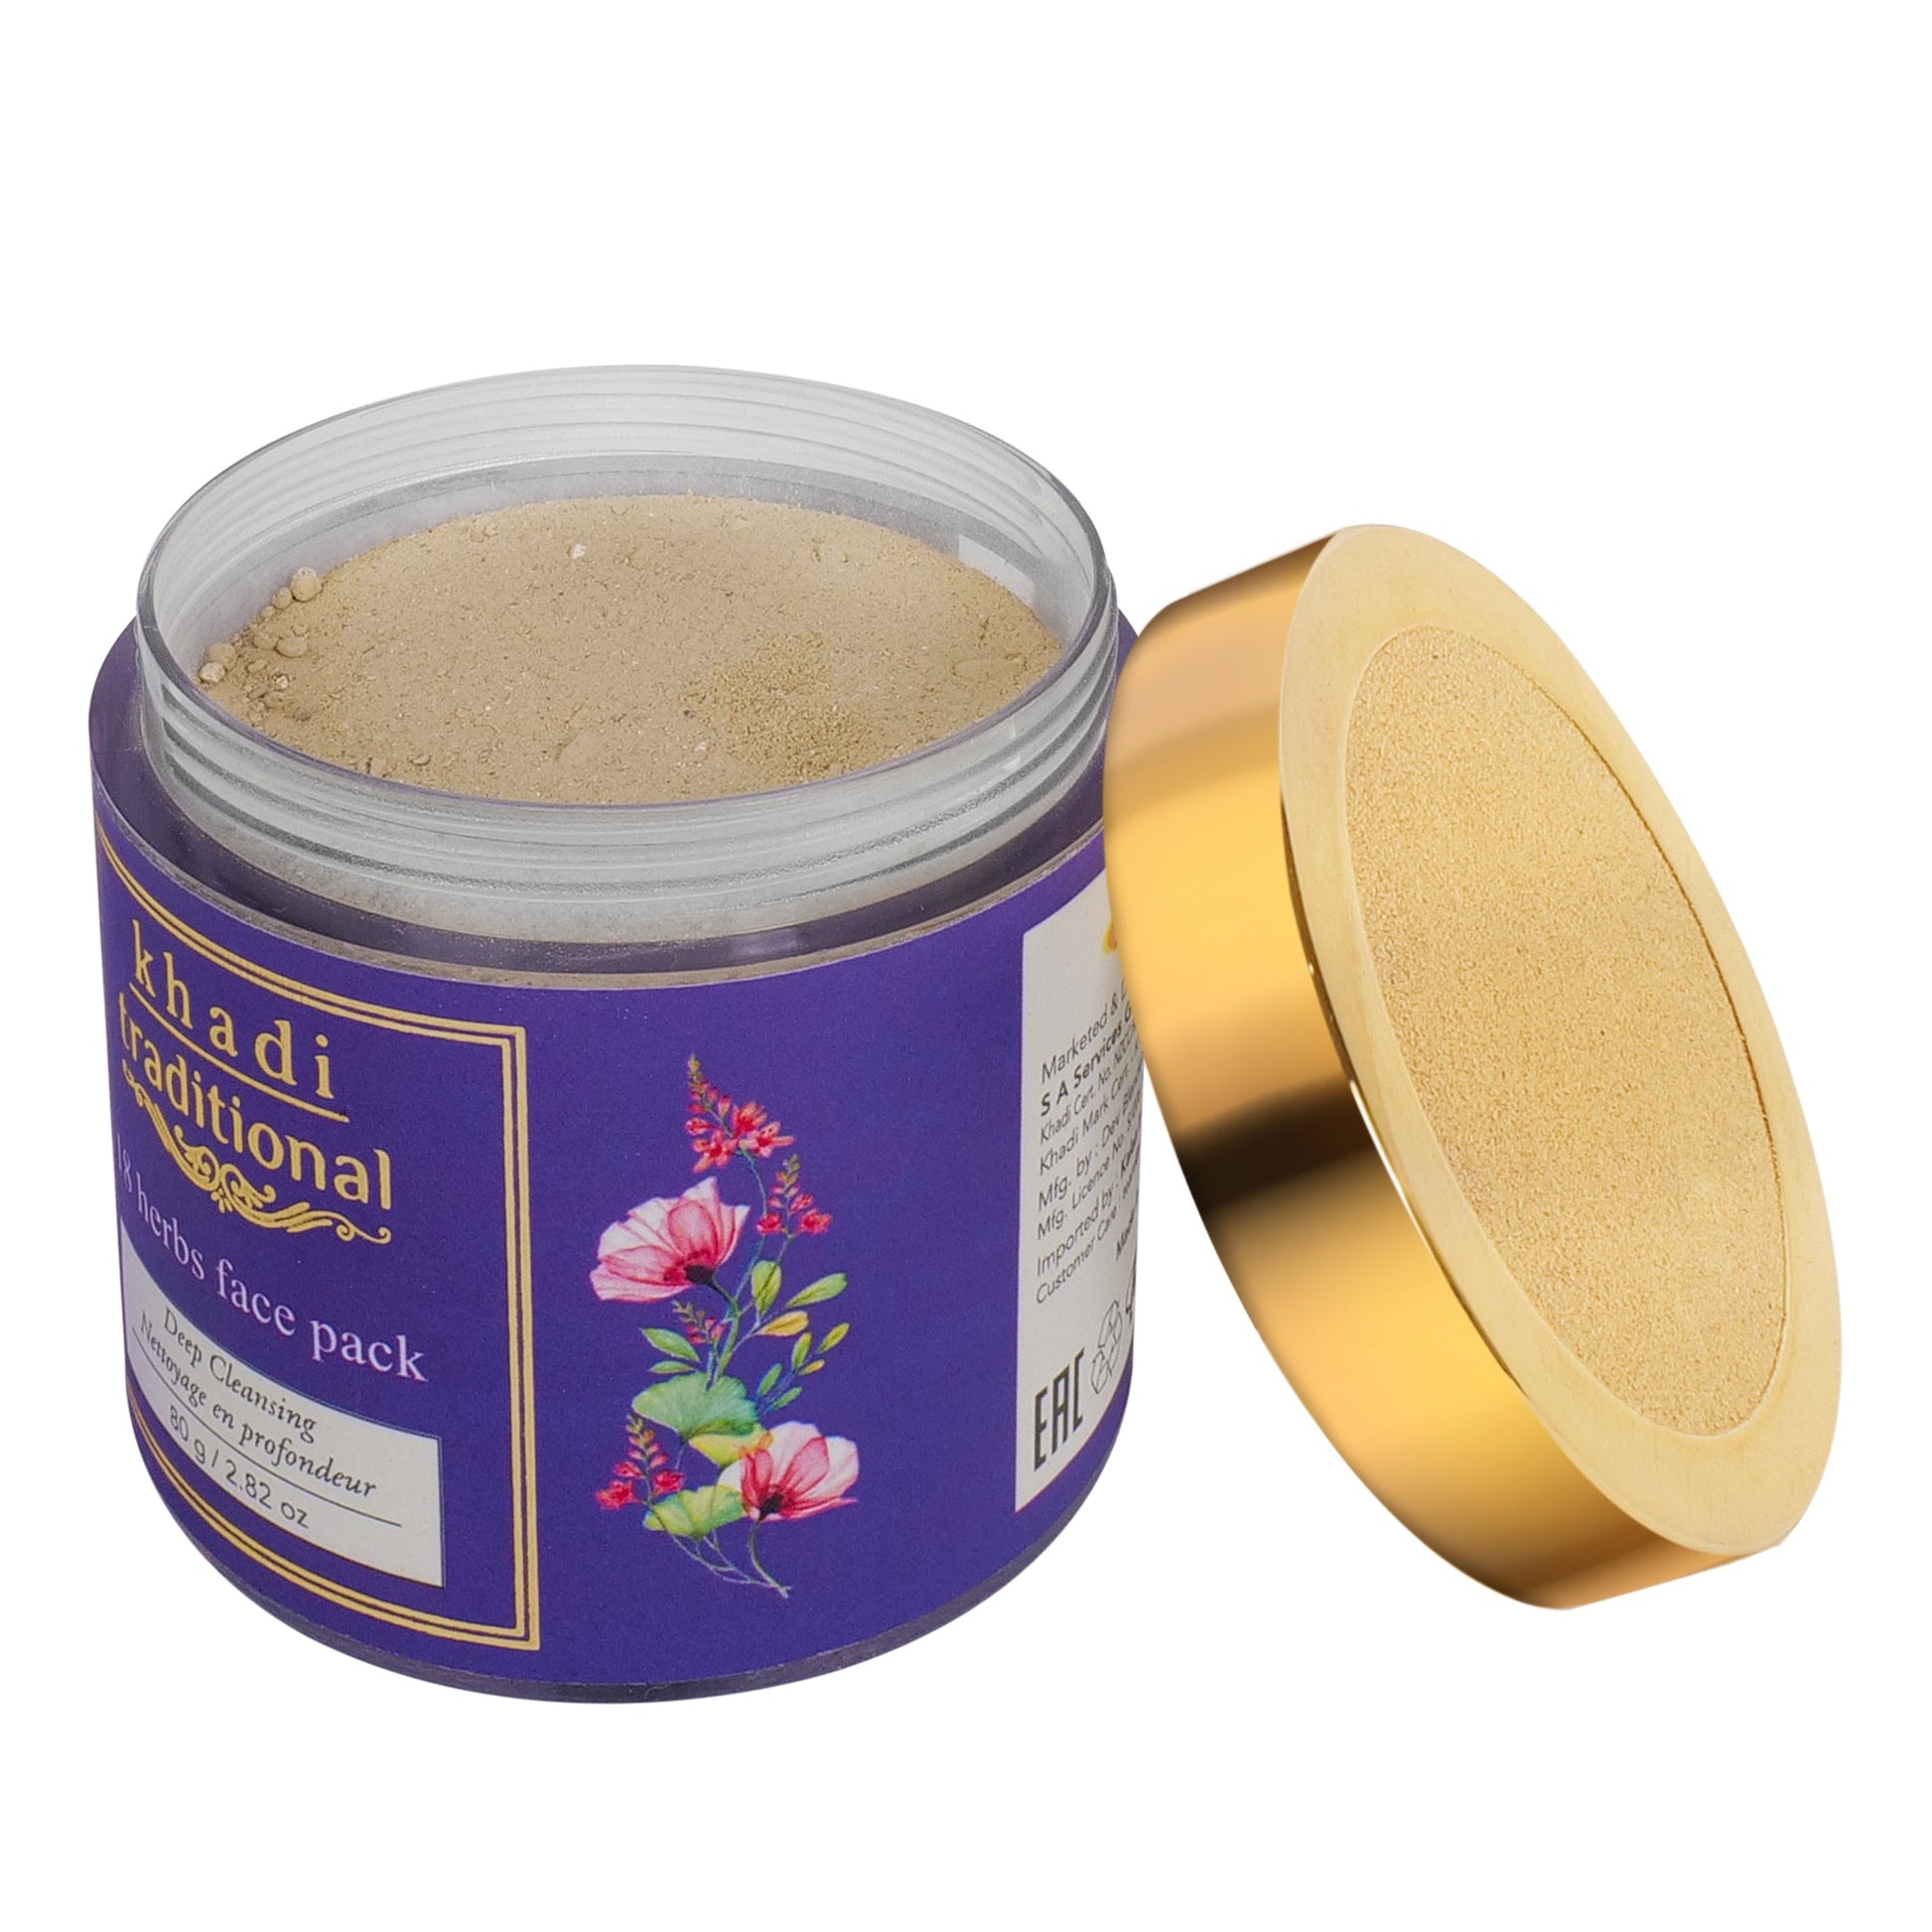 Khadi Traditional 18 Herbs Face Pack